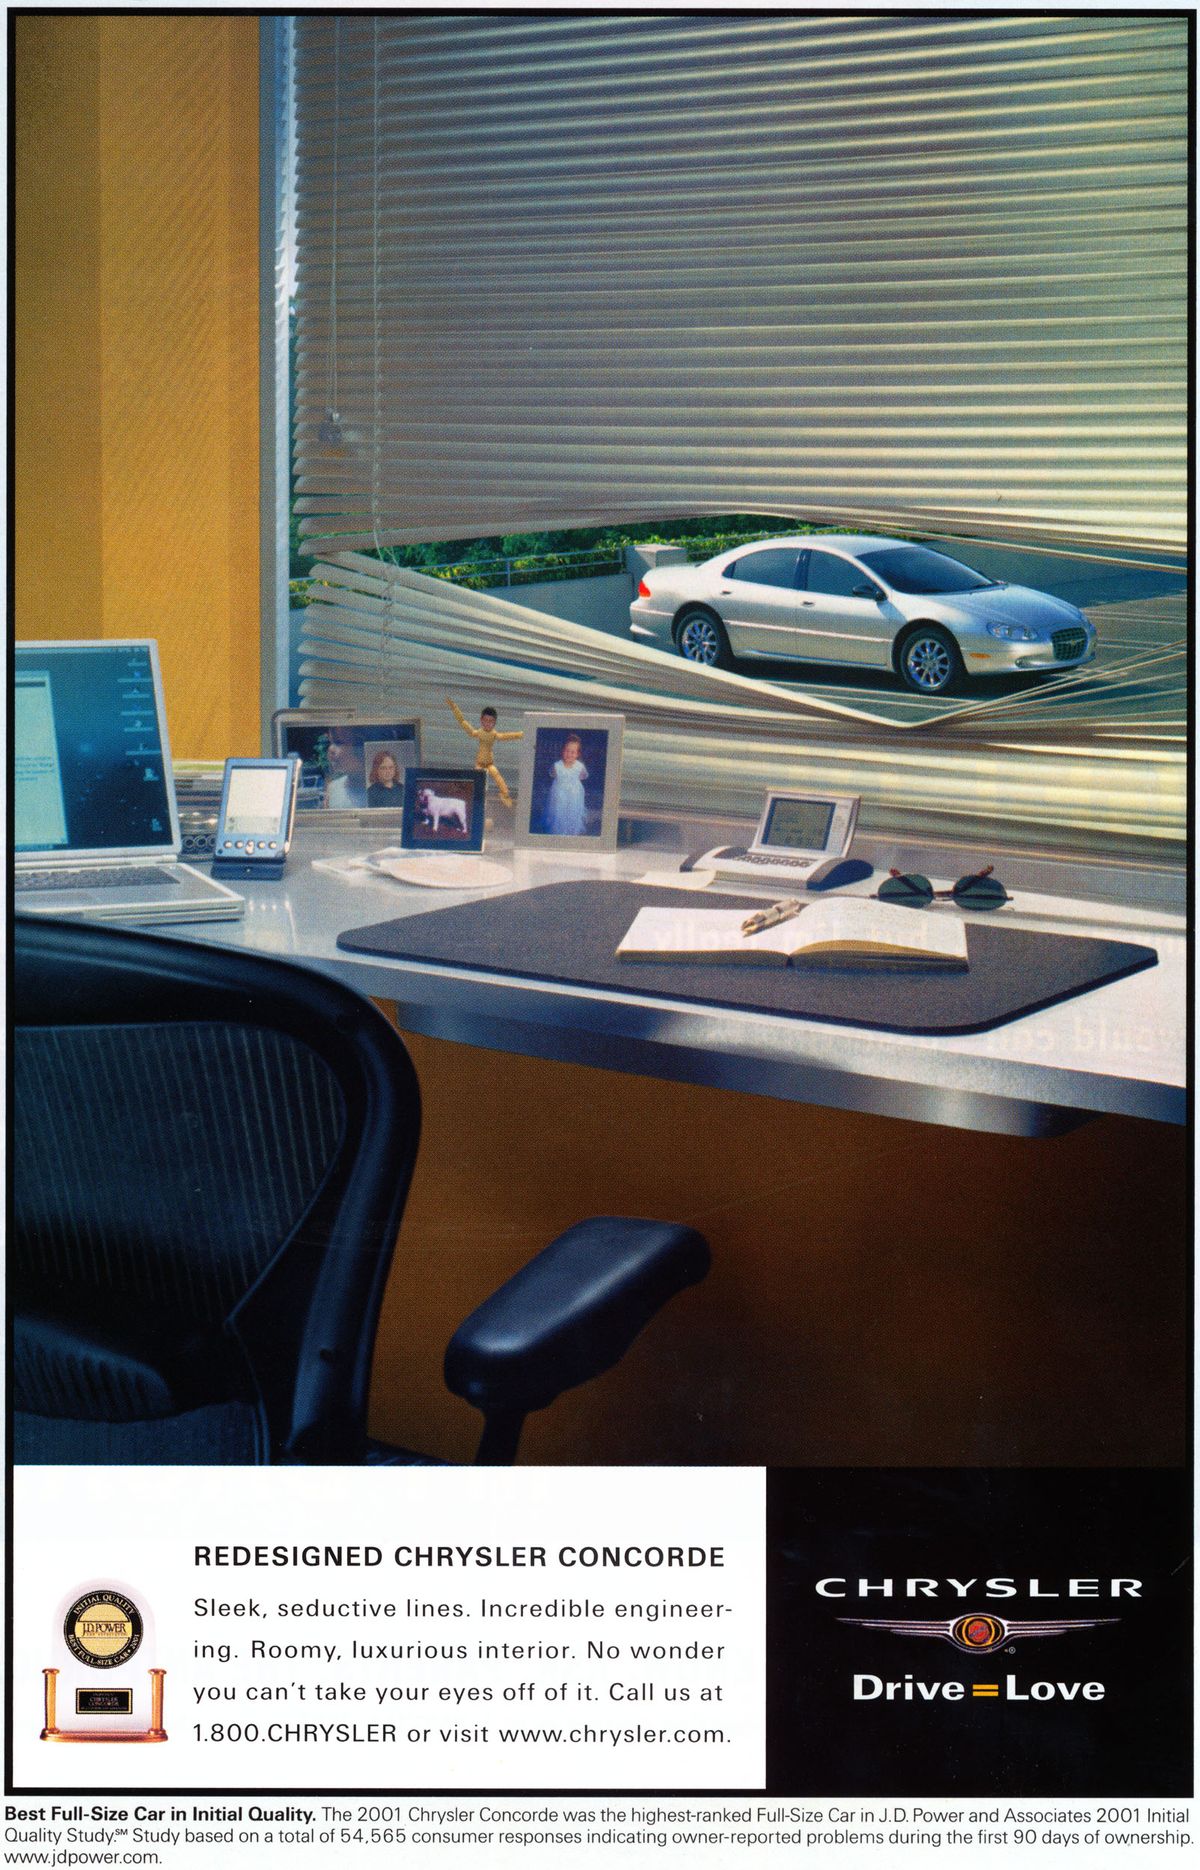 2002 chrysler concorde magazine advertisement